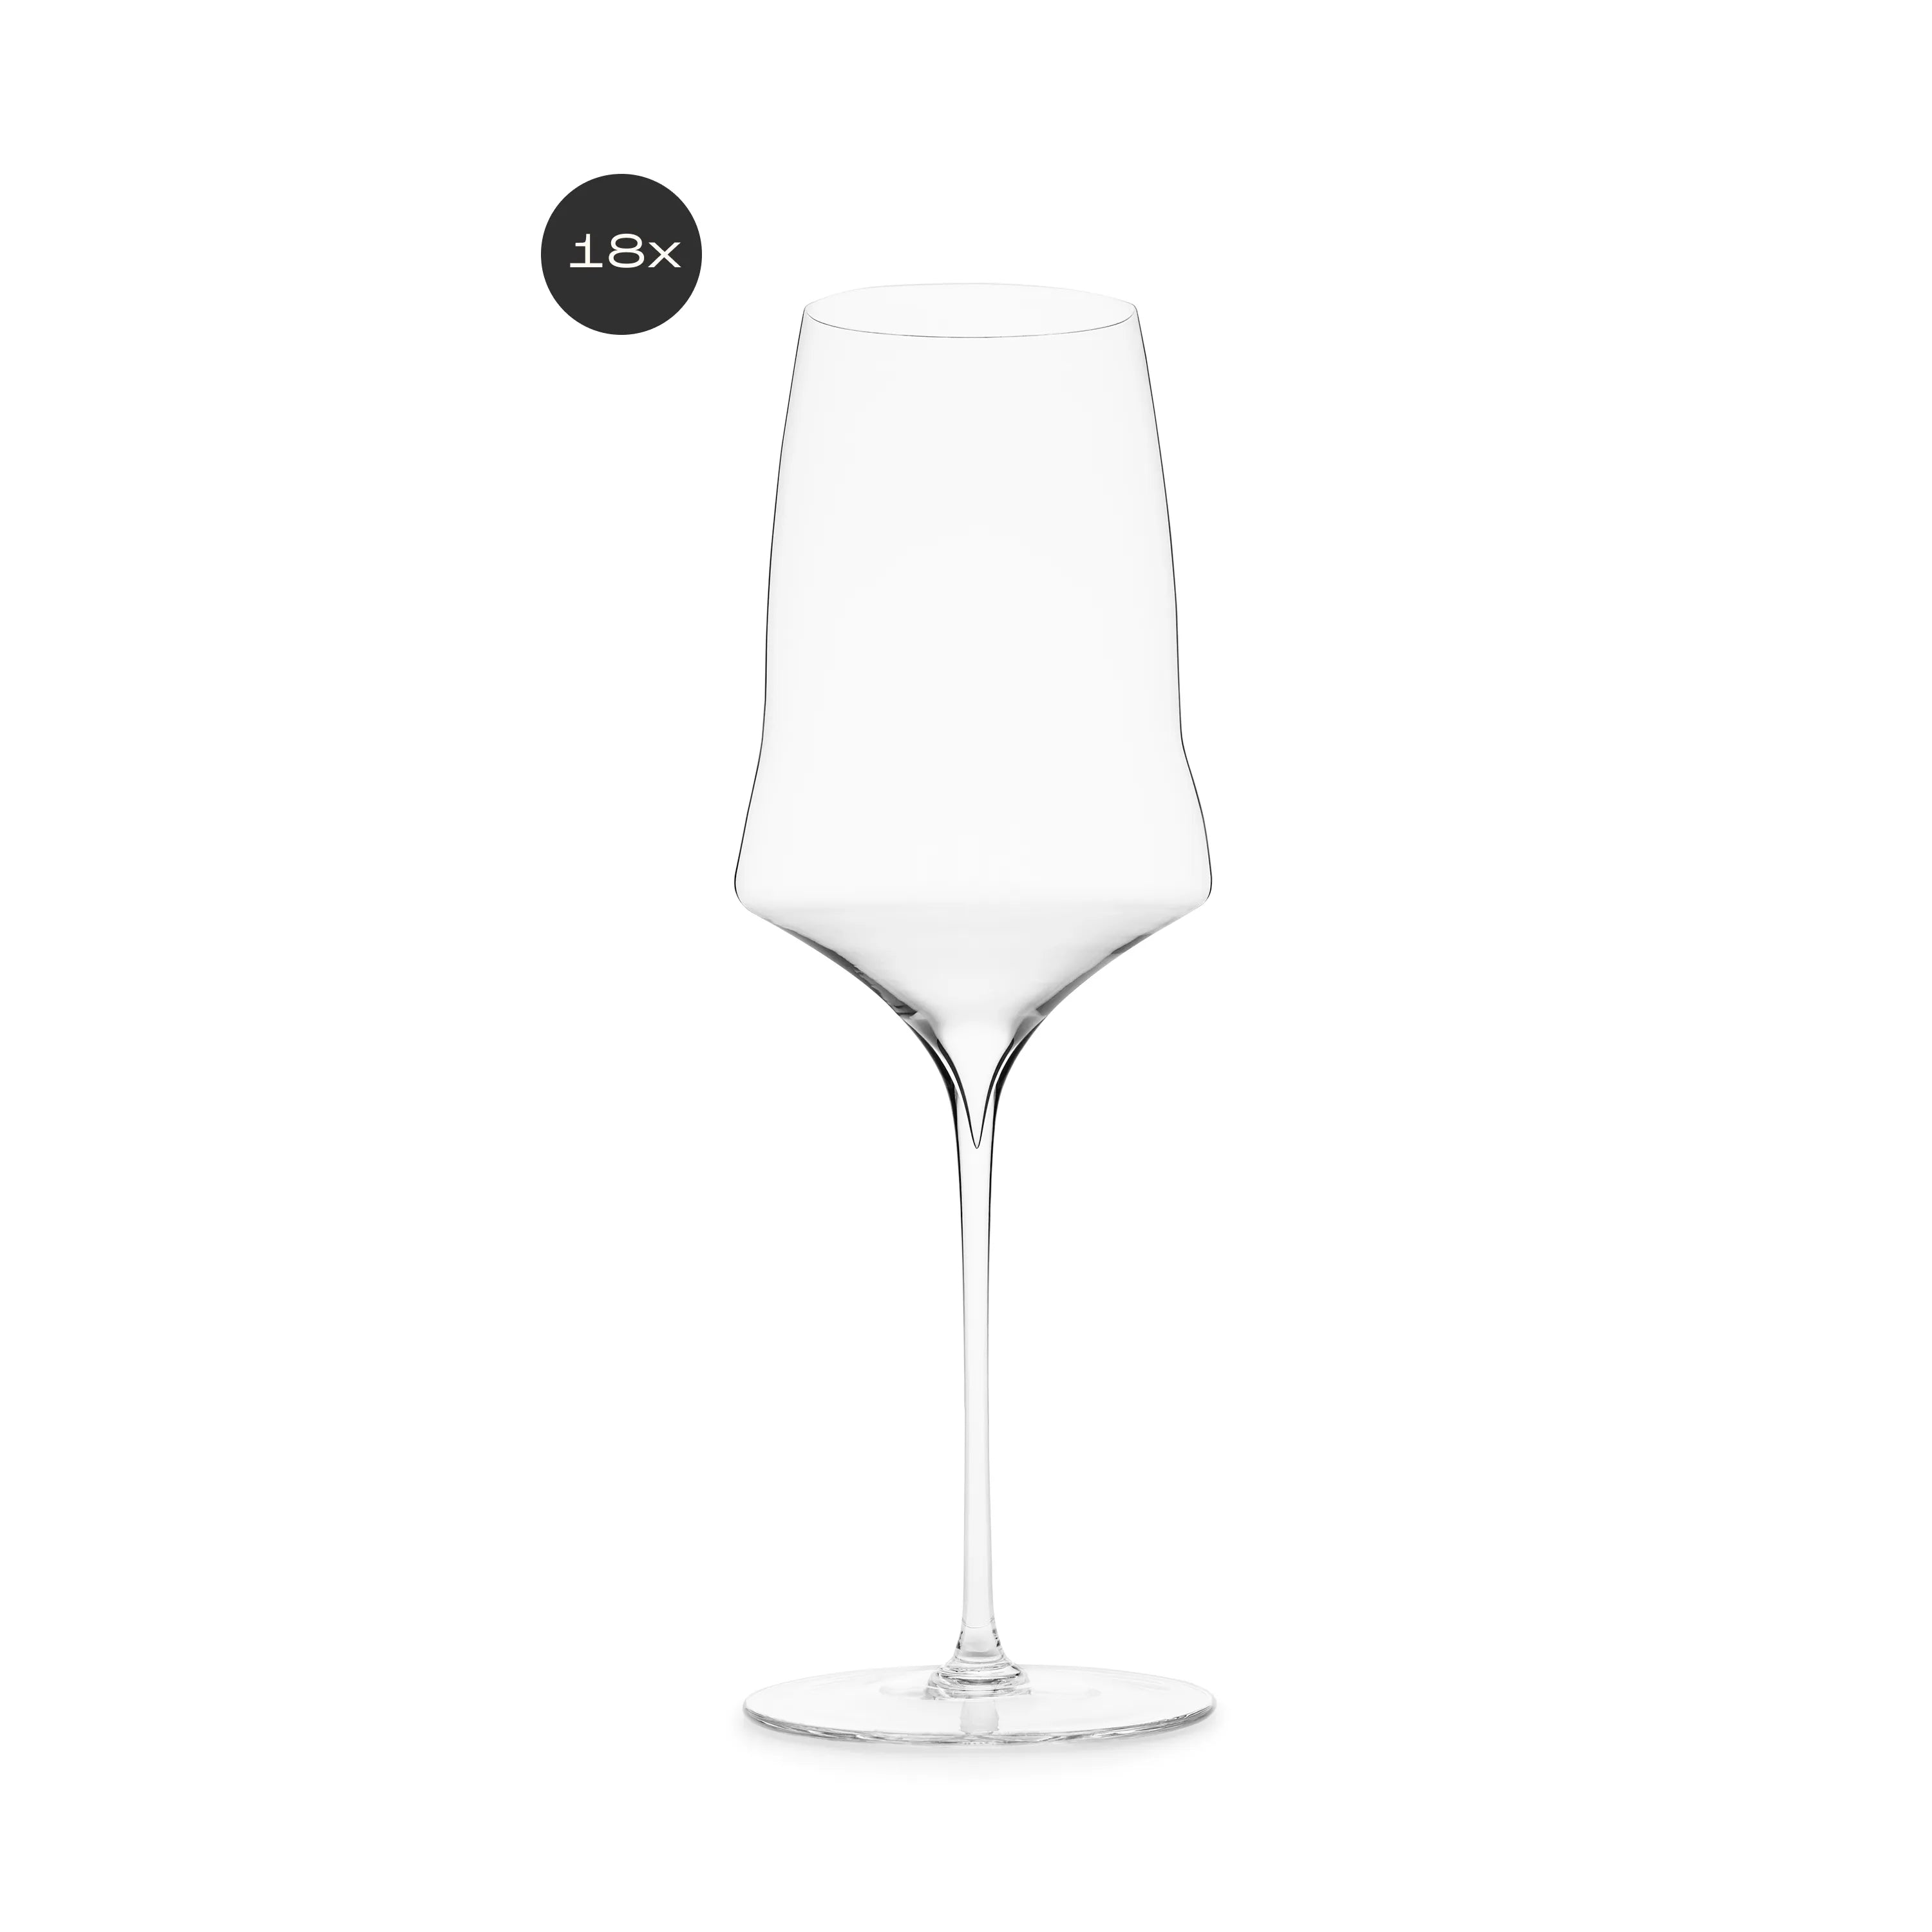 JOSEPHINE No 1 by Josephinenhütte – White wine glasses #Set_Set of 18